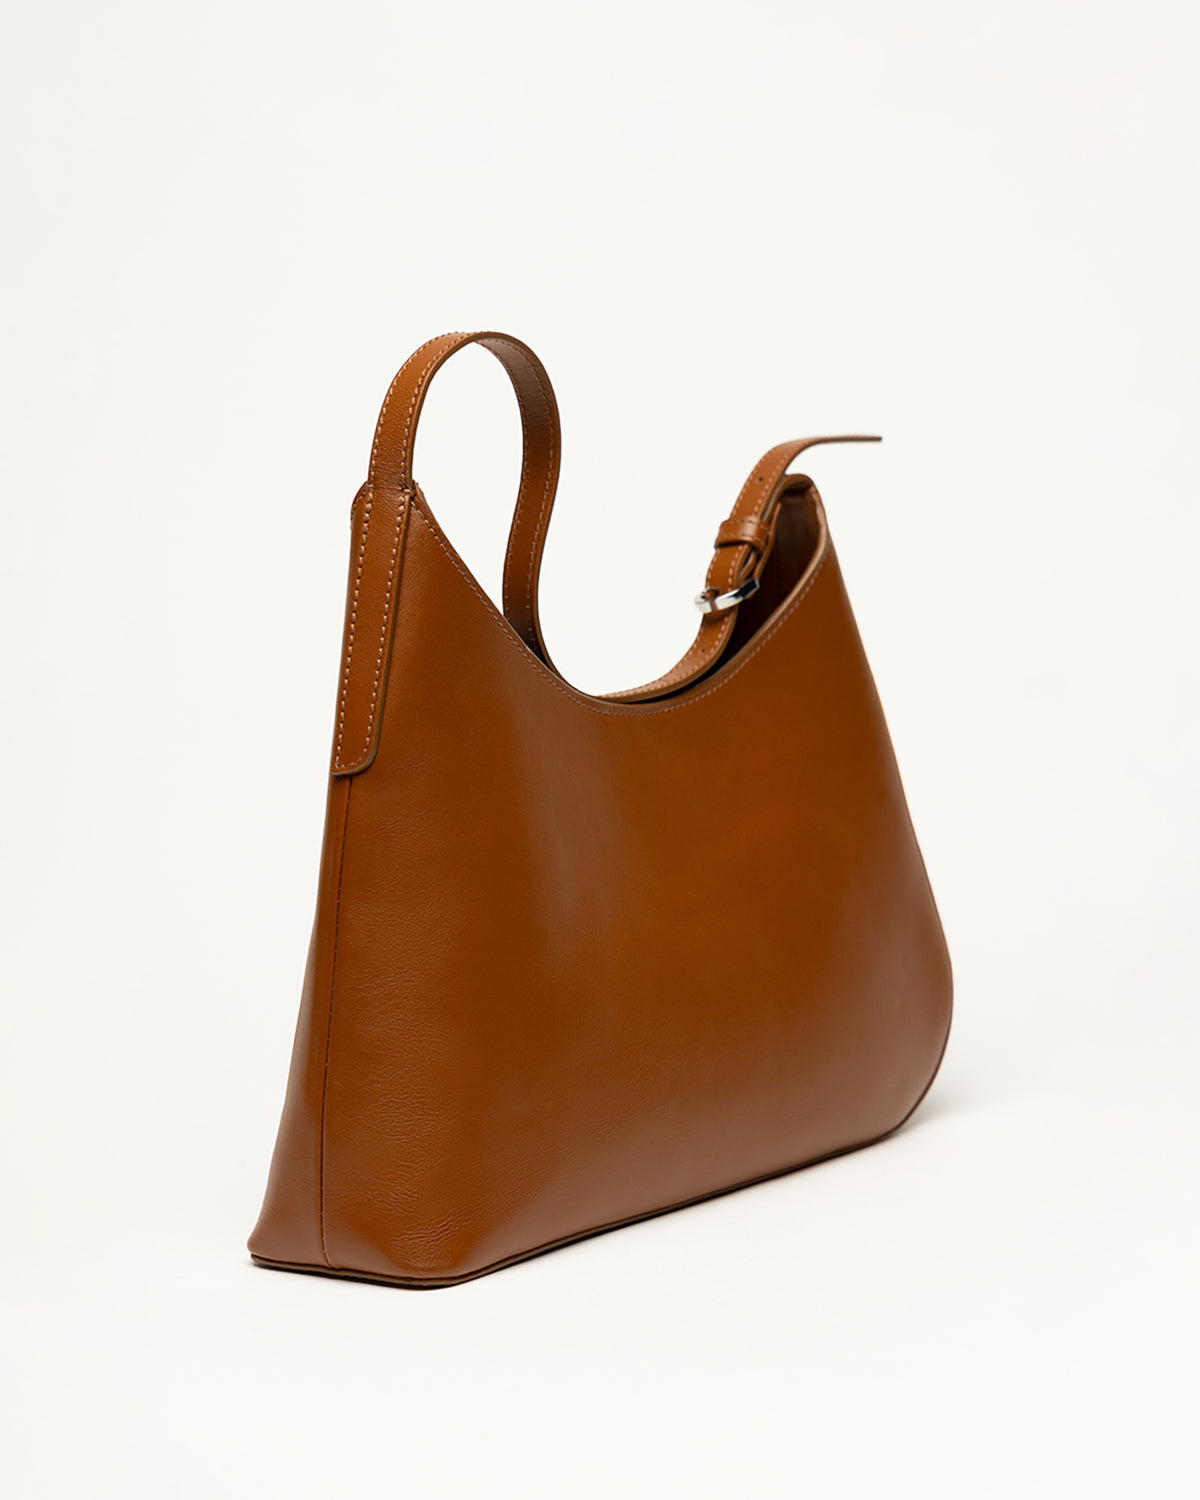 Arch Smooth Leather Shoulder Bag